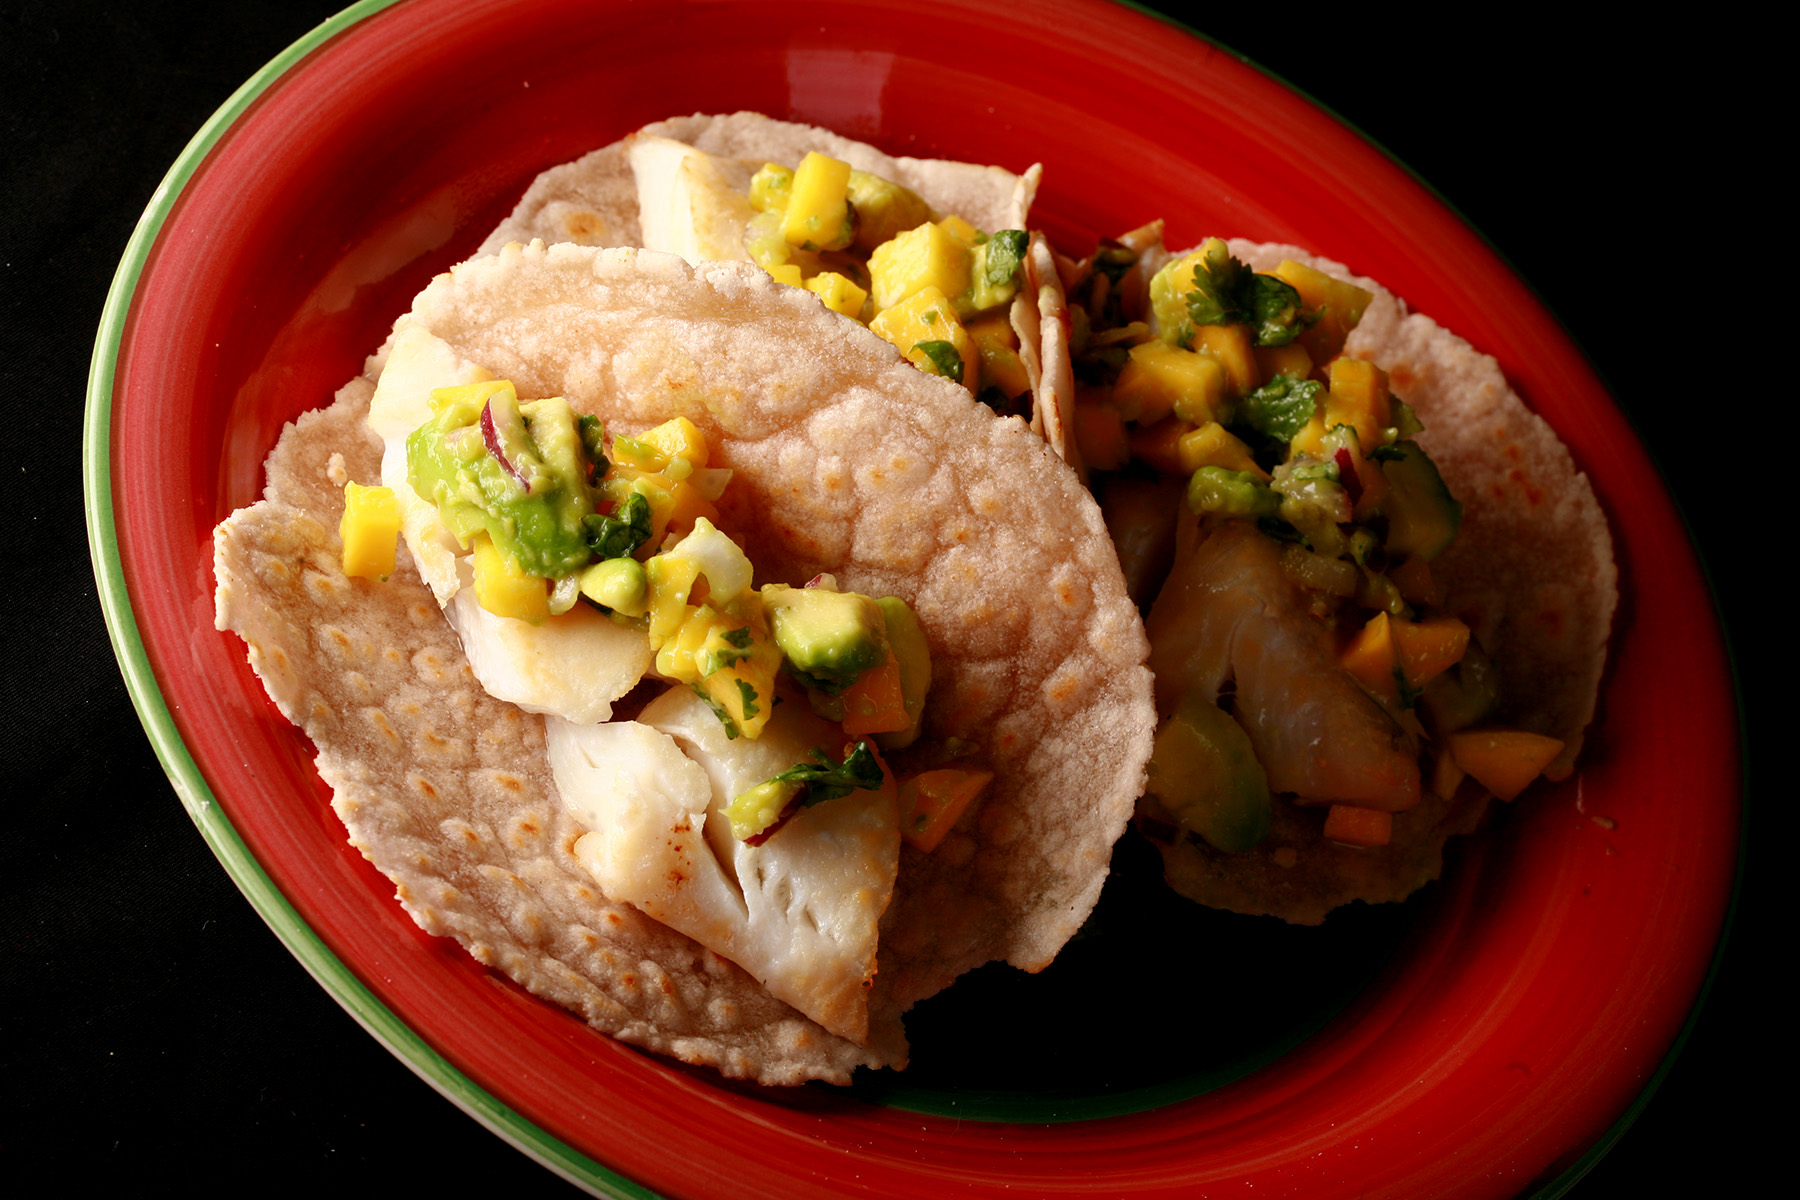 Cassava flour paleo fish tacos, with mango salsa, on a red plate.